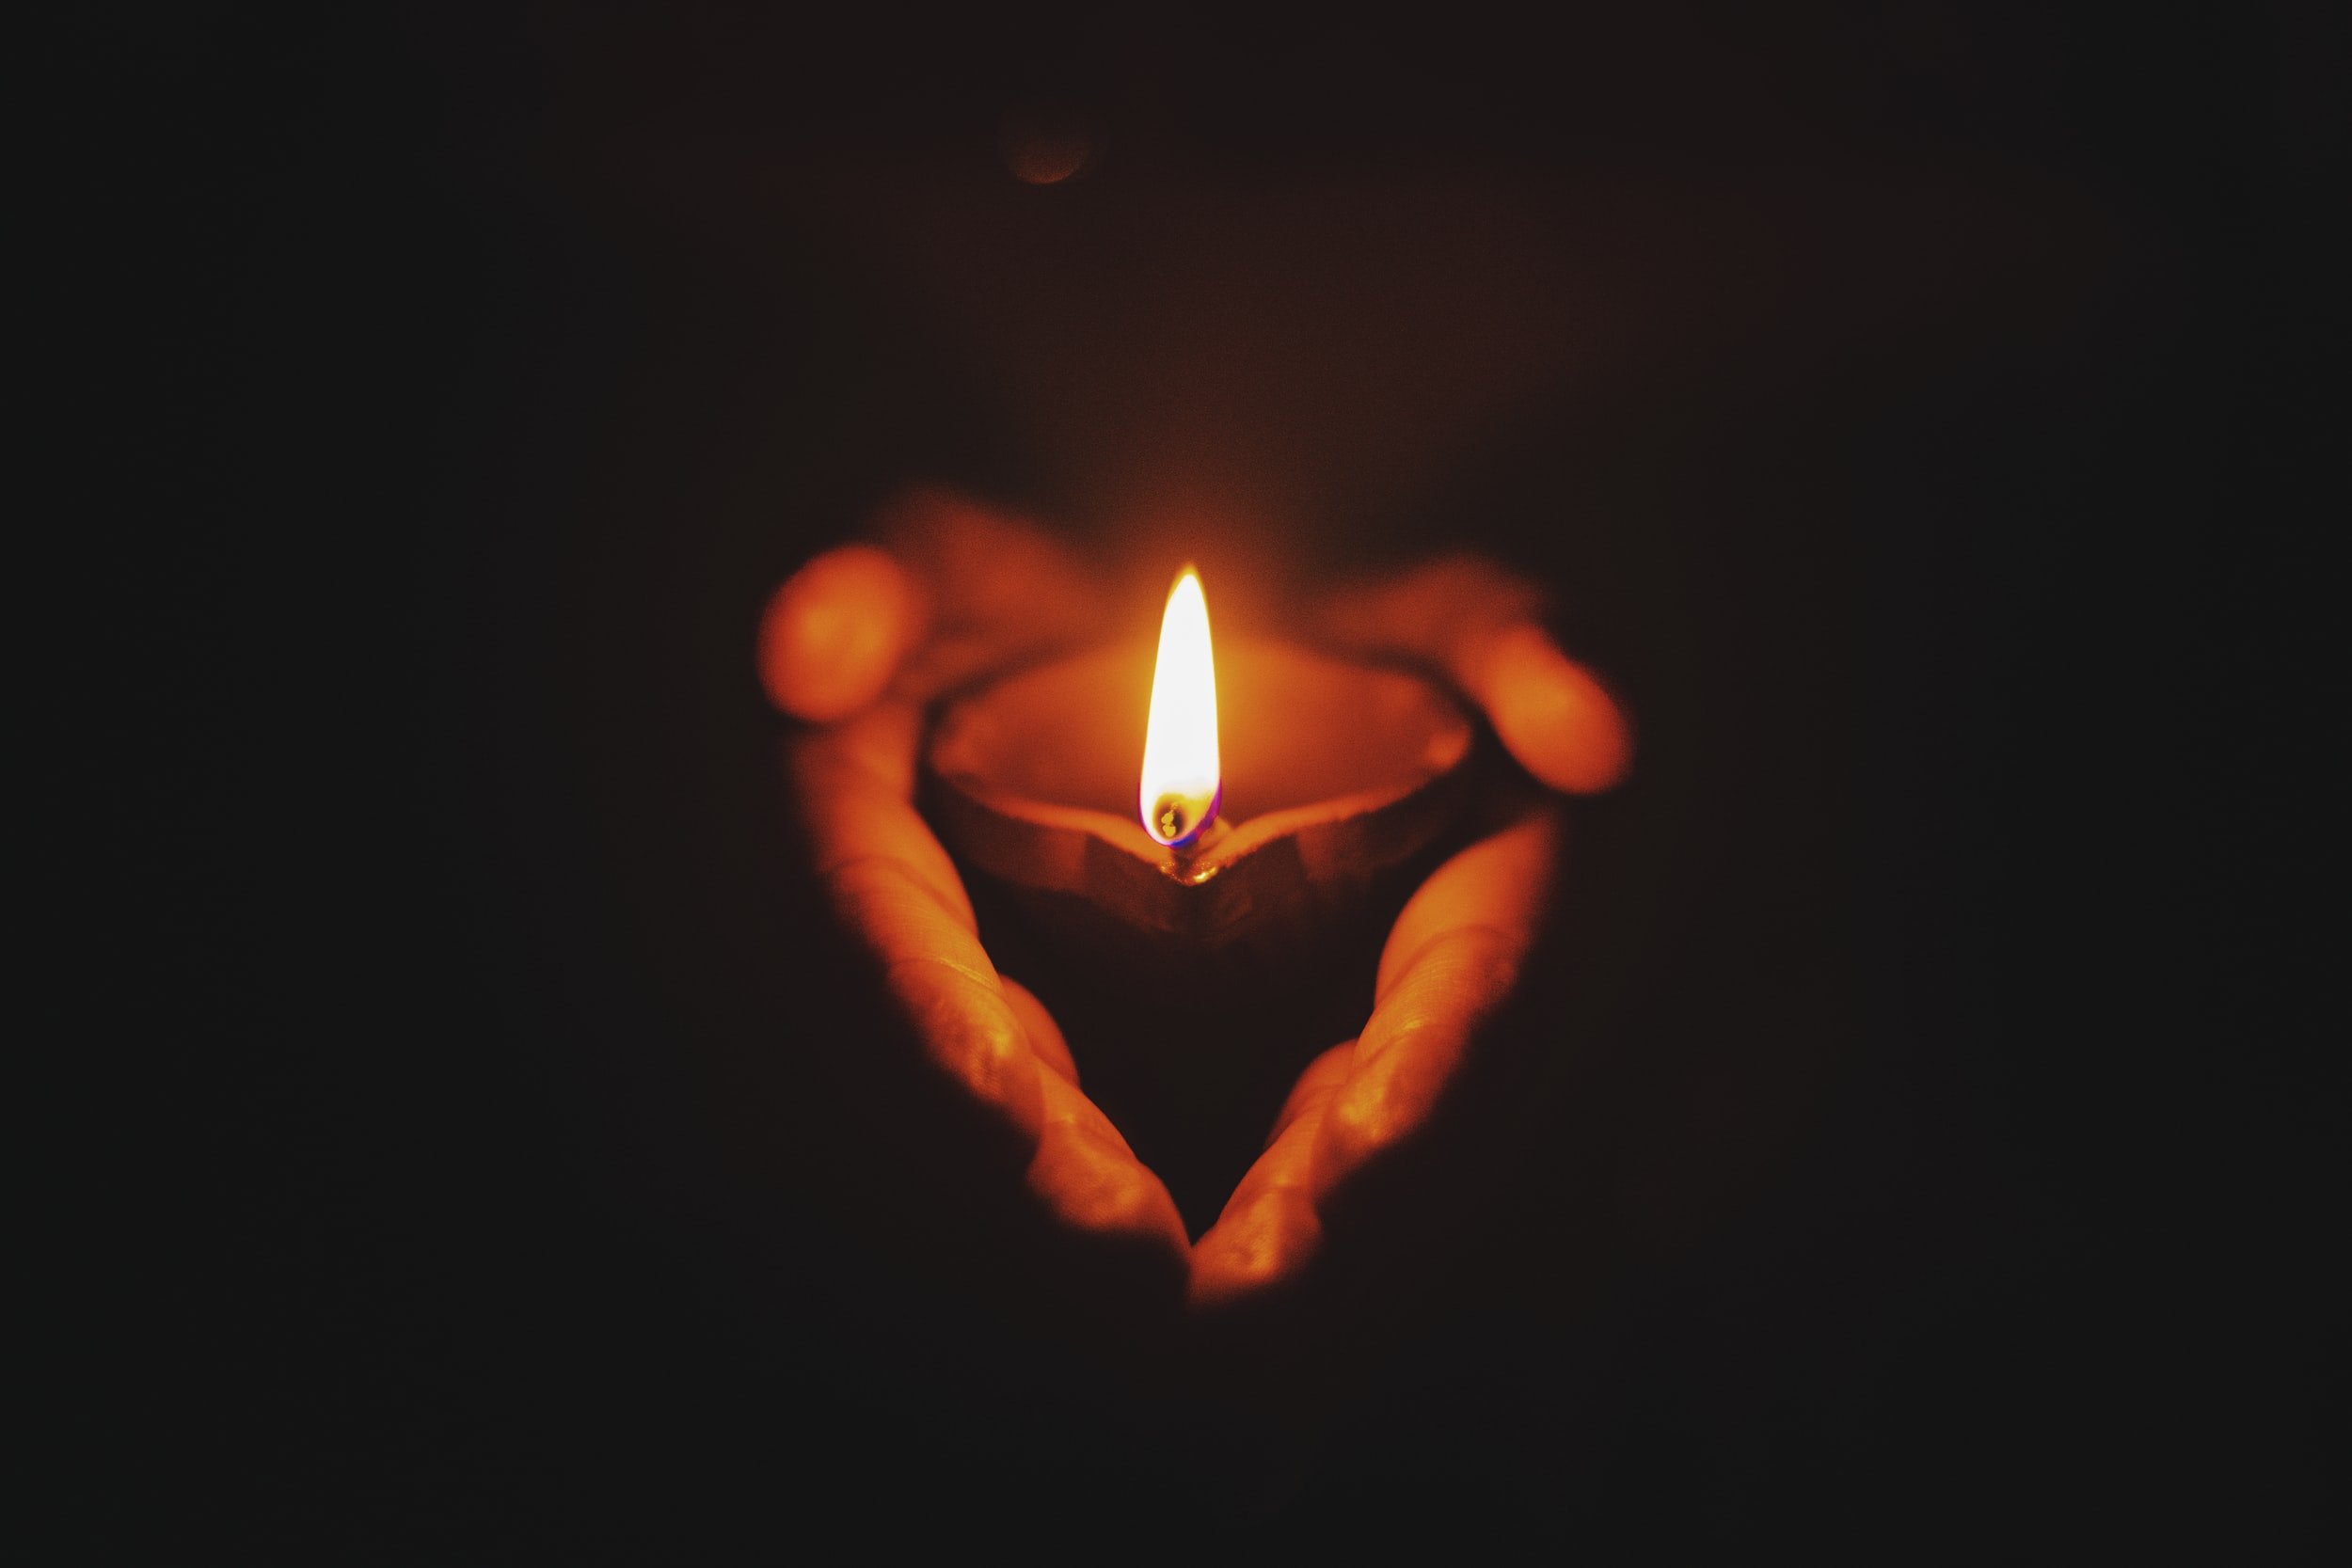 Adoption is hard; lit candle